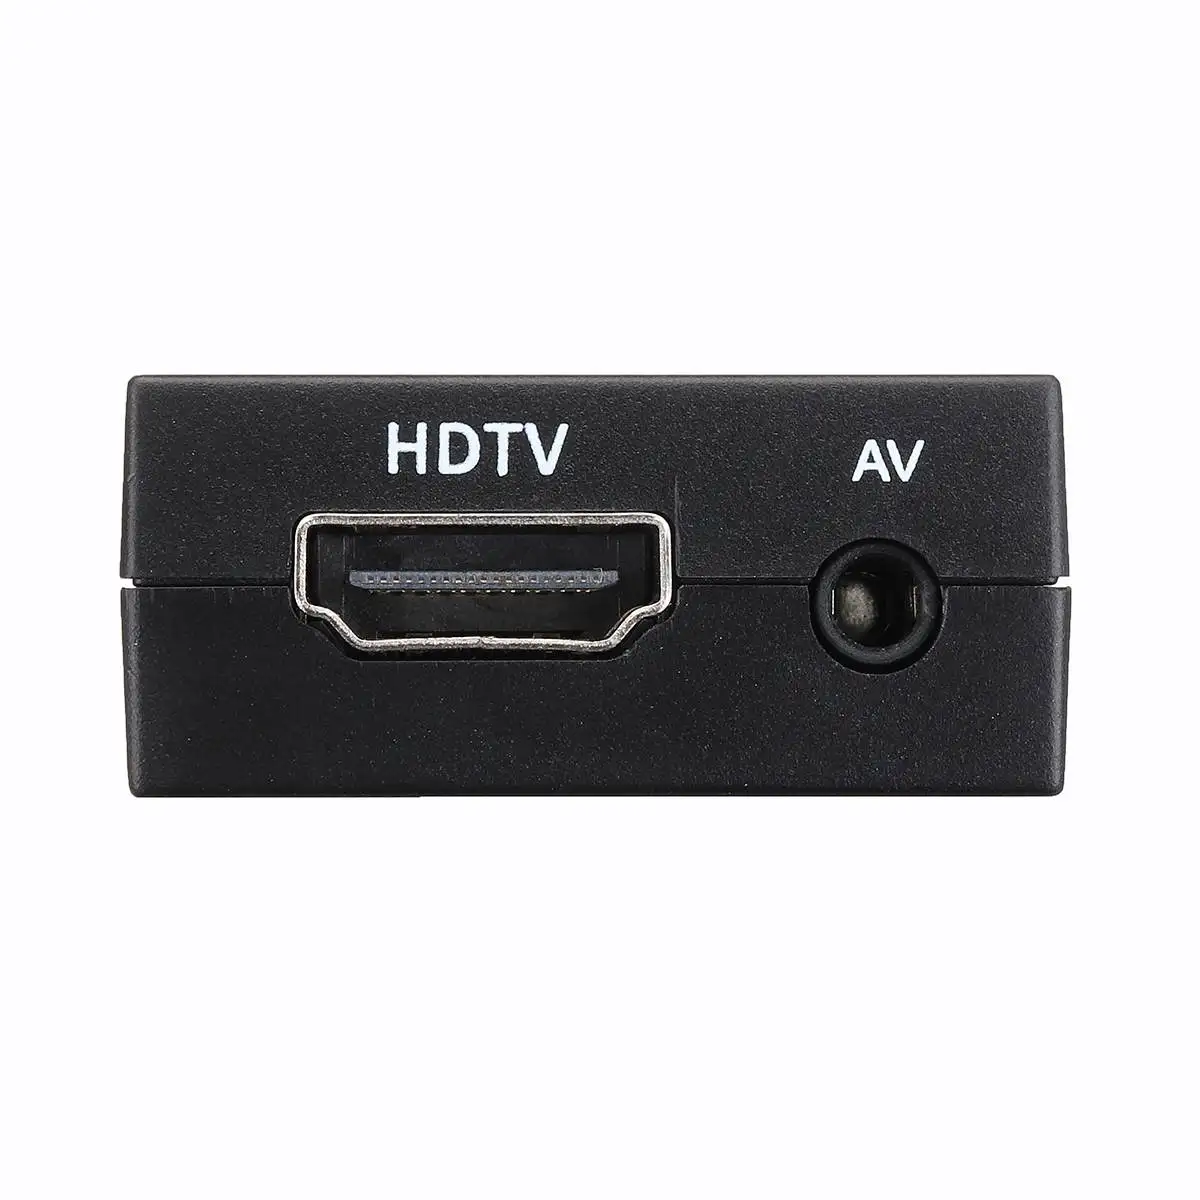 USB2.0 DVB-T2 ТВ-палка DVB T2 ТВ-тюнер коробка Full-HD 1080P цифровой телевизионный ресивер Поддержка MPEG4 Встроенный Русский Руководство